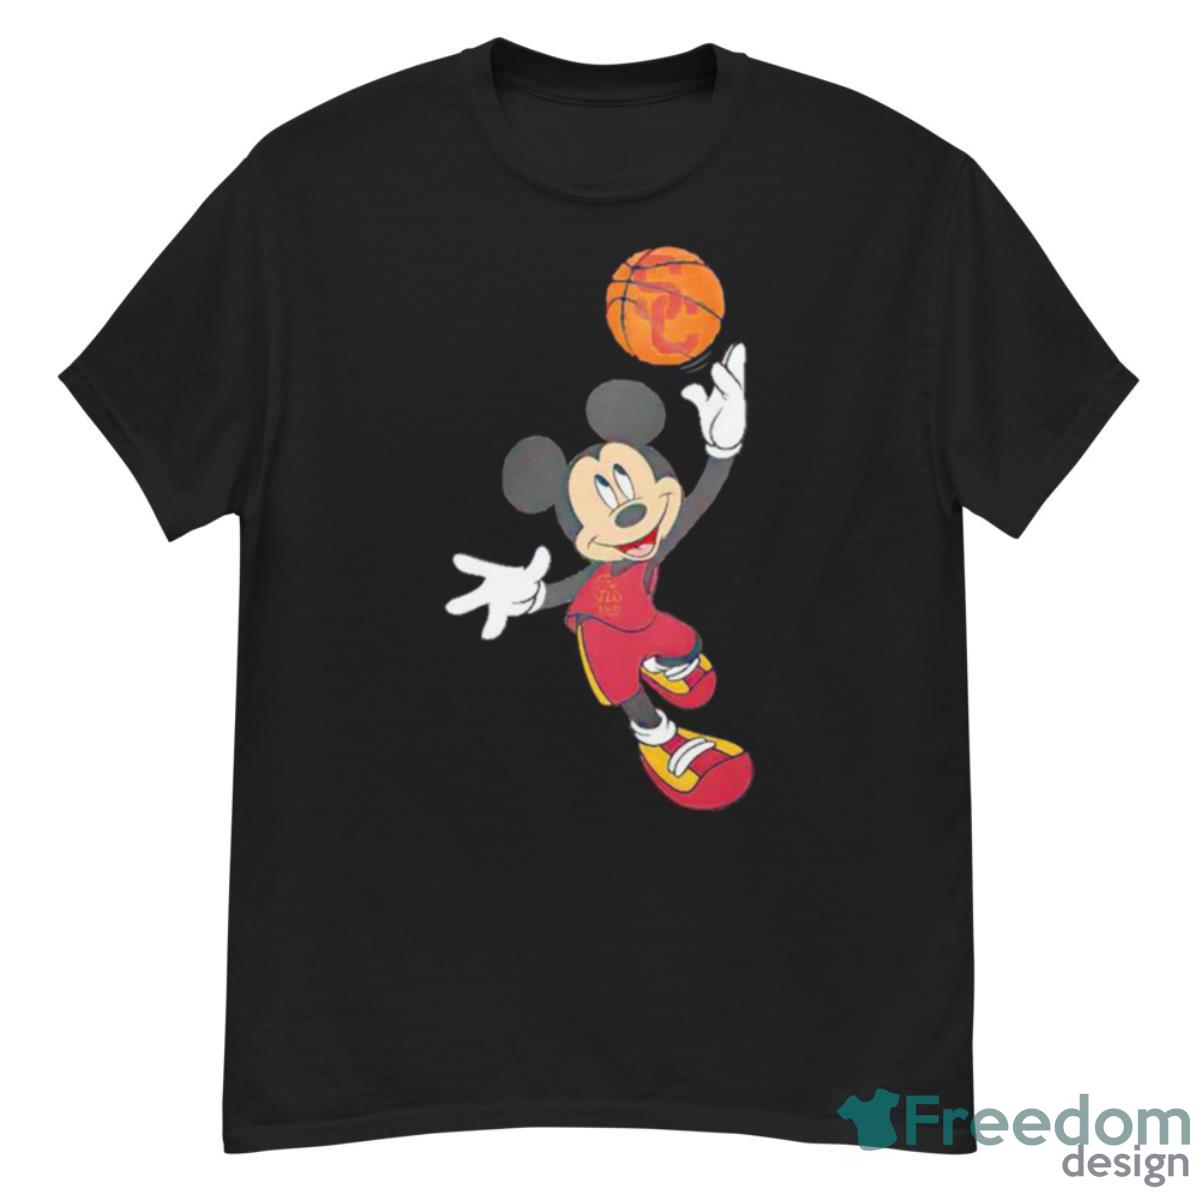 USC Trojans Mickey March Madness shirt - G500 Men’s Classic T-Shirt